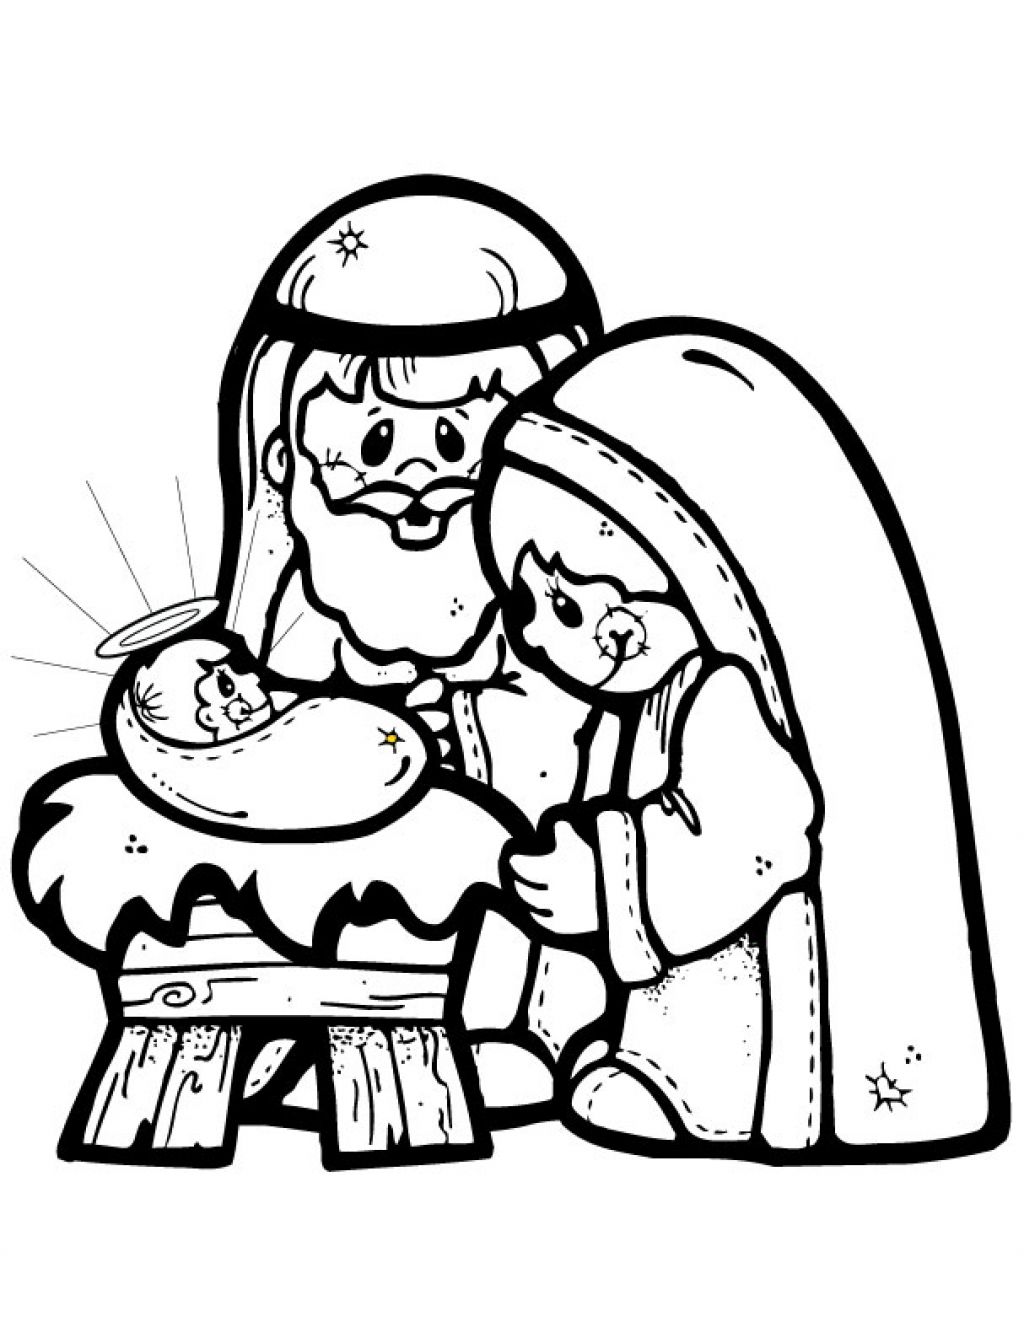 joseph mary baby jesus coloring page source fxy nativity scene ...